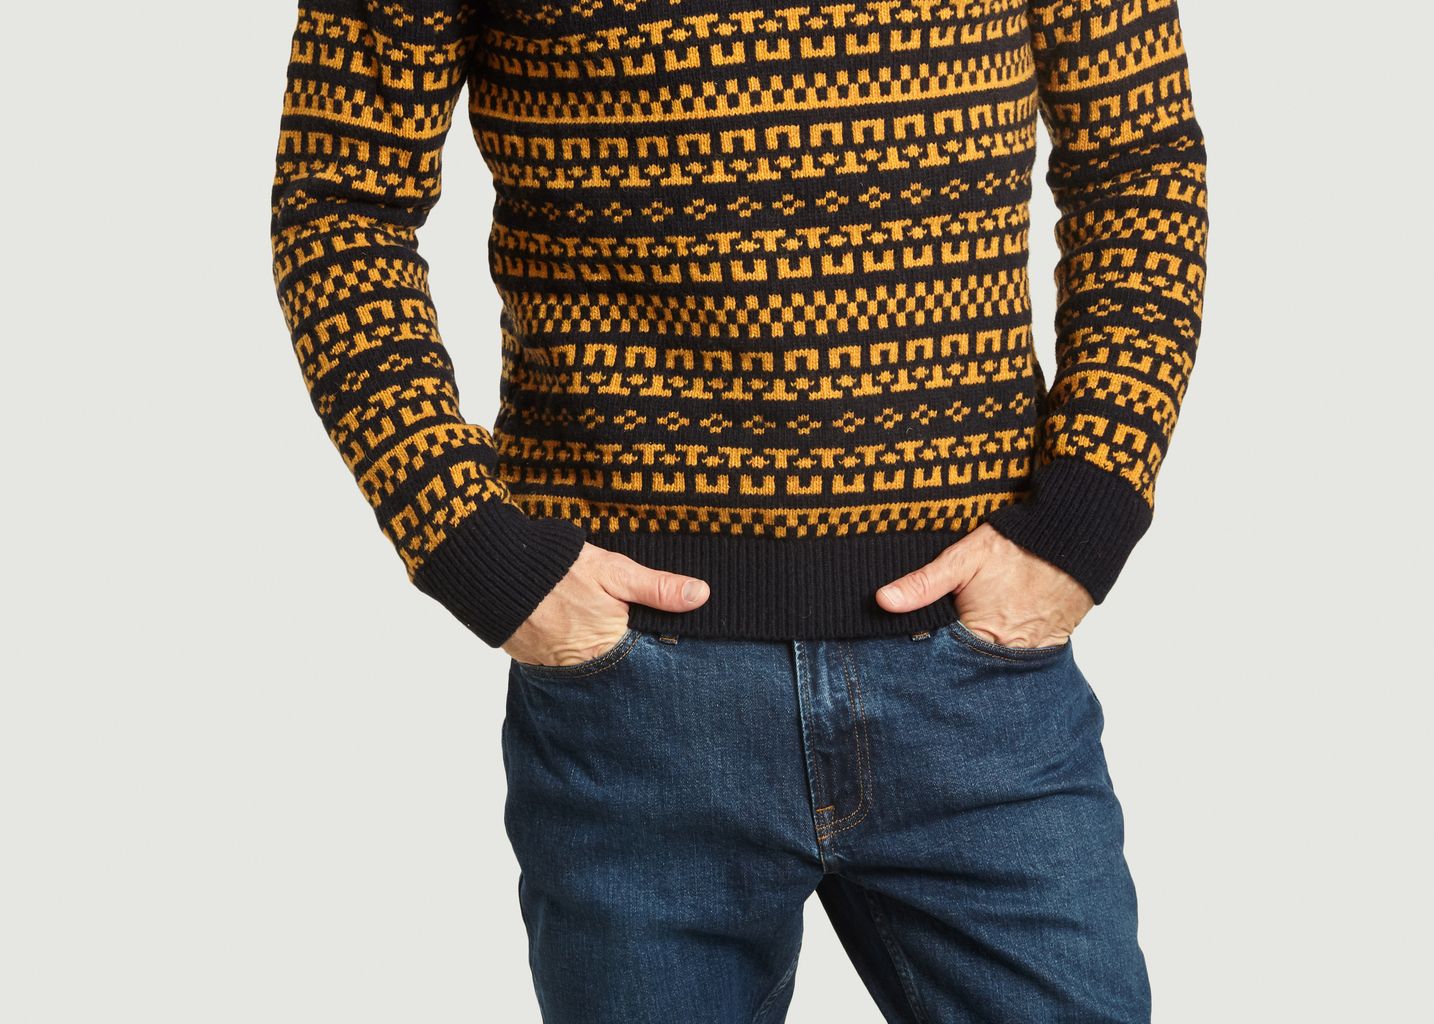 Random jacquard pattern sweater - Olow